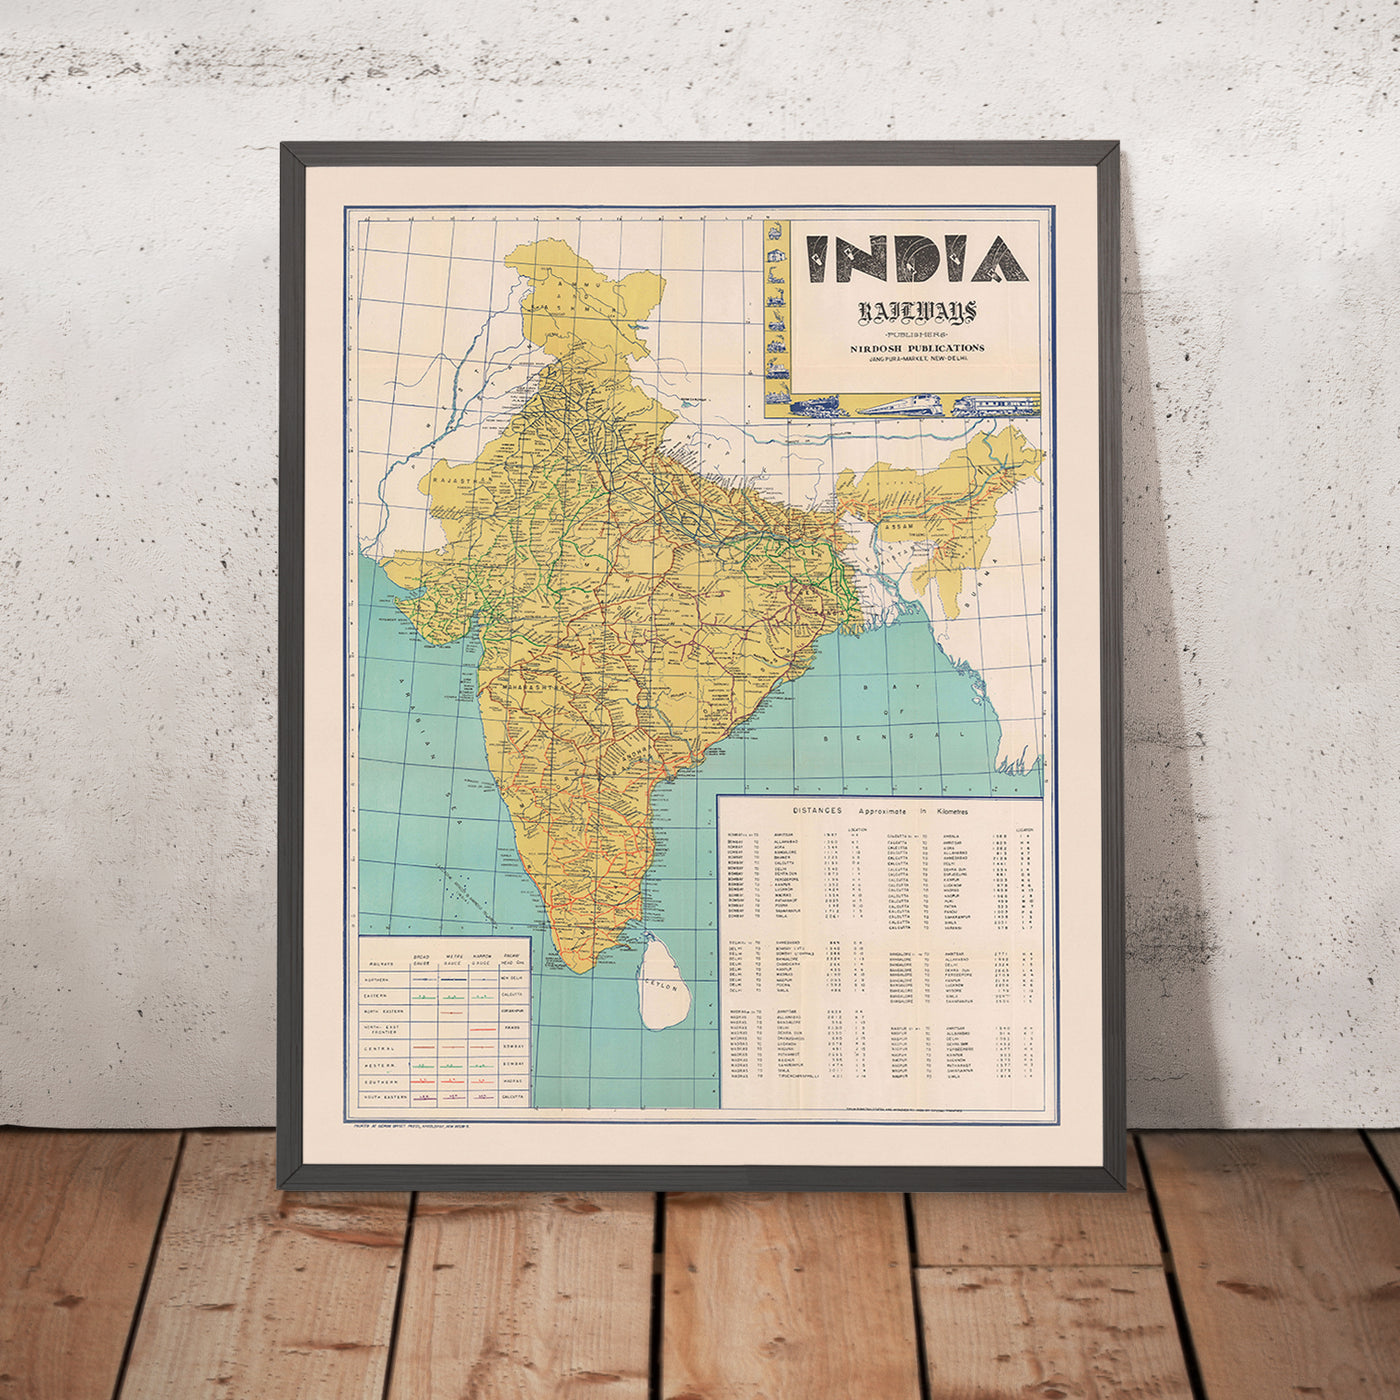 Alte Karte von Indien von Nirdosh Publications, 1960: Eisenbahnen, Mumbai, Delhi, Kolkata, Chennai, Bangalore